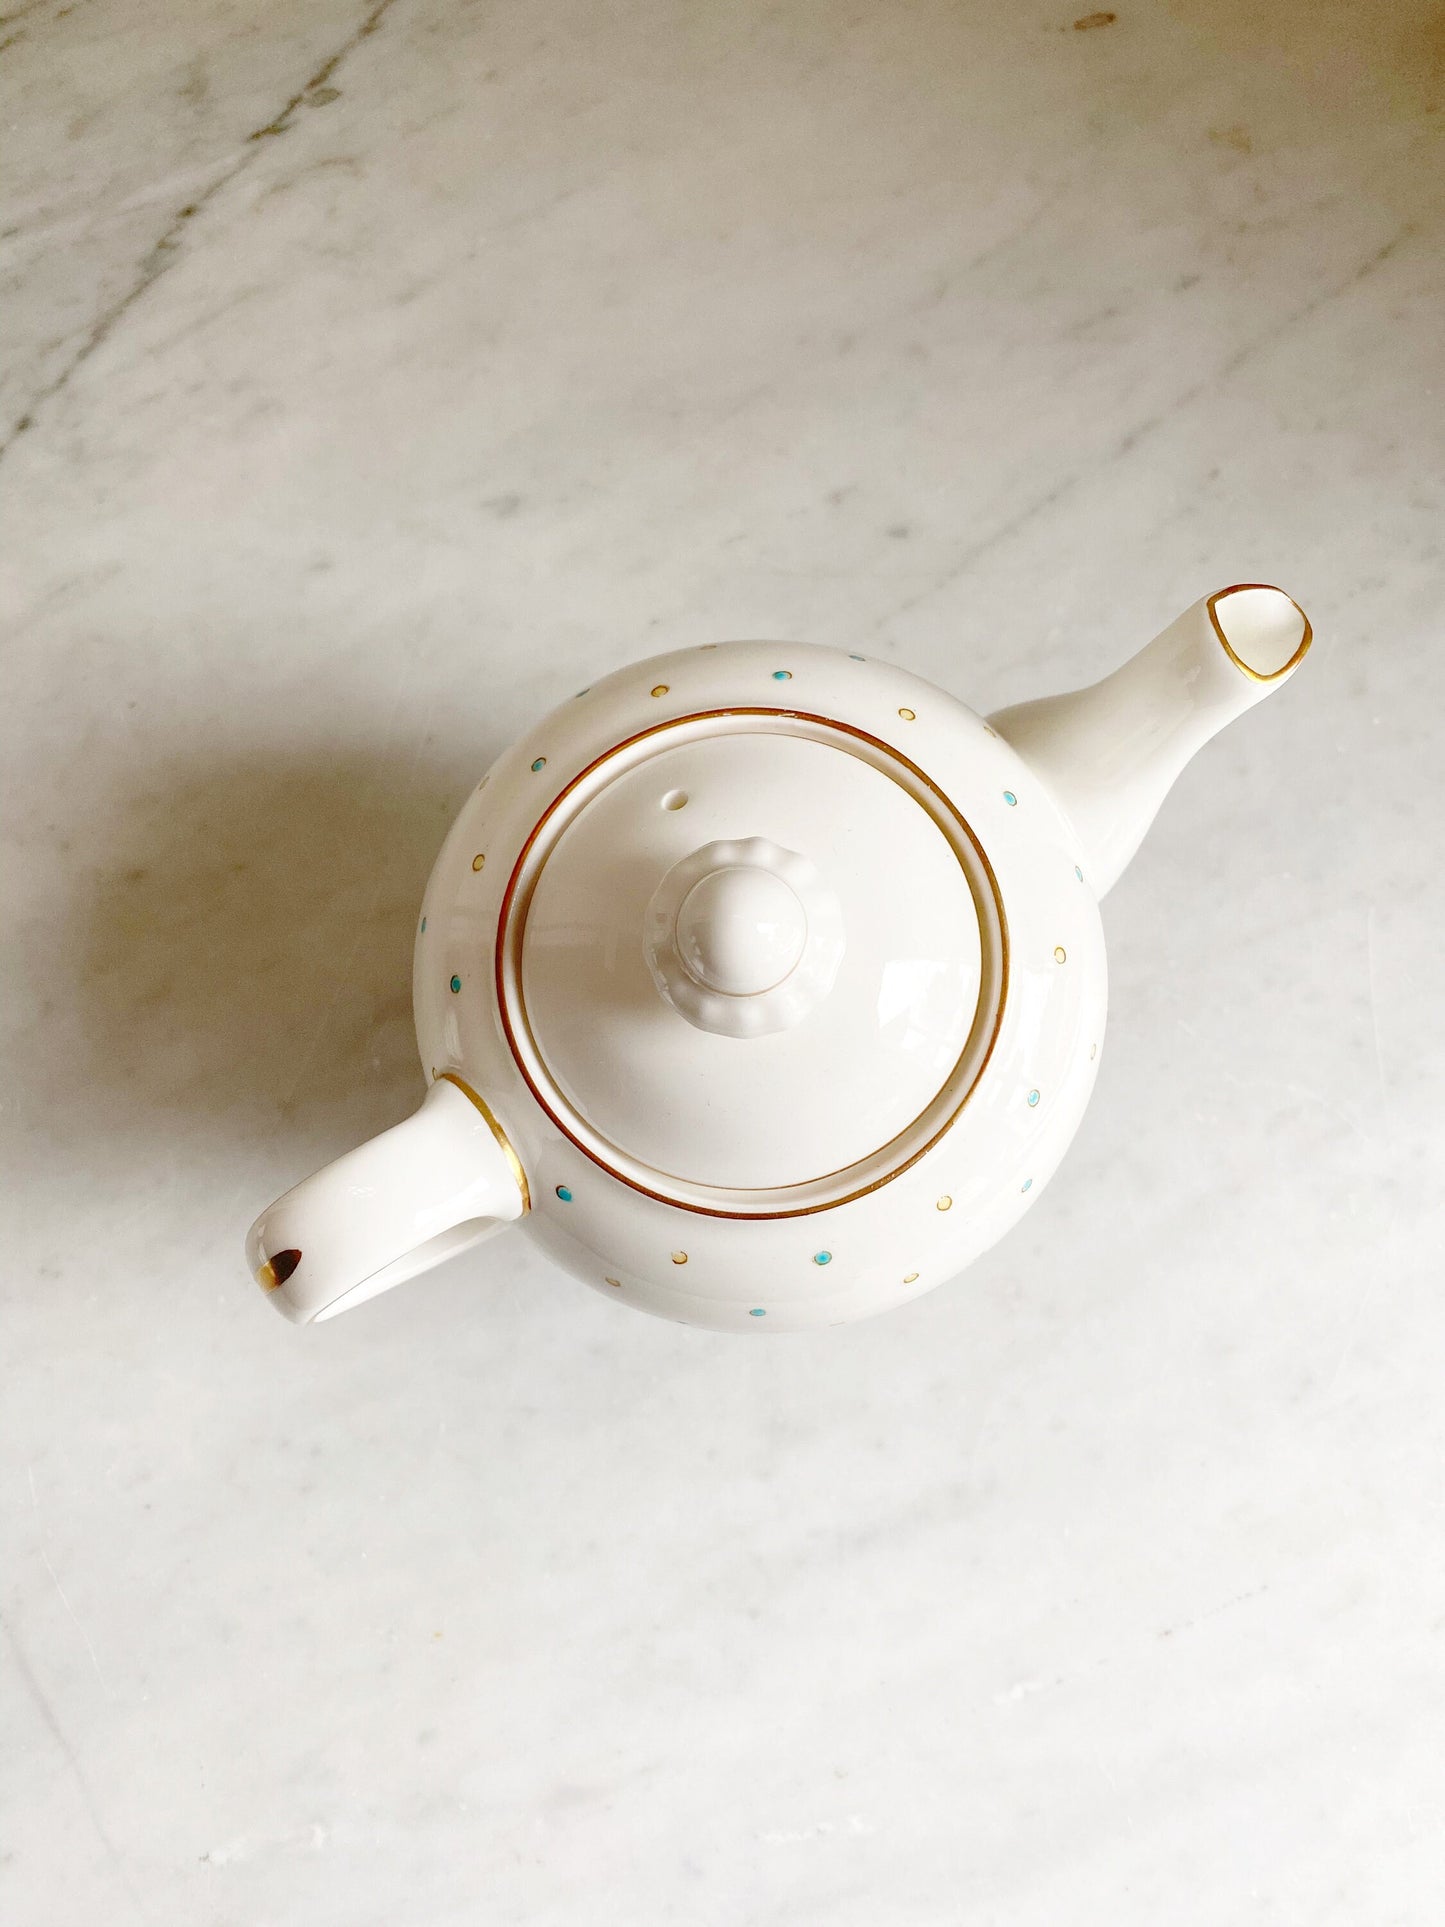 Royal Doulton Harmony H4864, Individual Afternoon Tea Set, Bone china tea pot /coffee pot, Sugar Bowl, Creamer/Milk Jug, Made in England